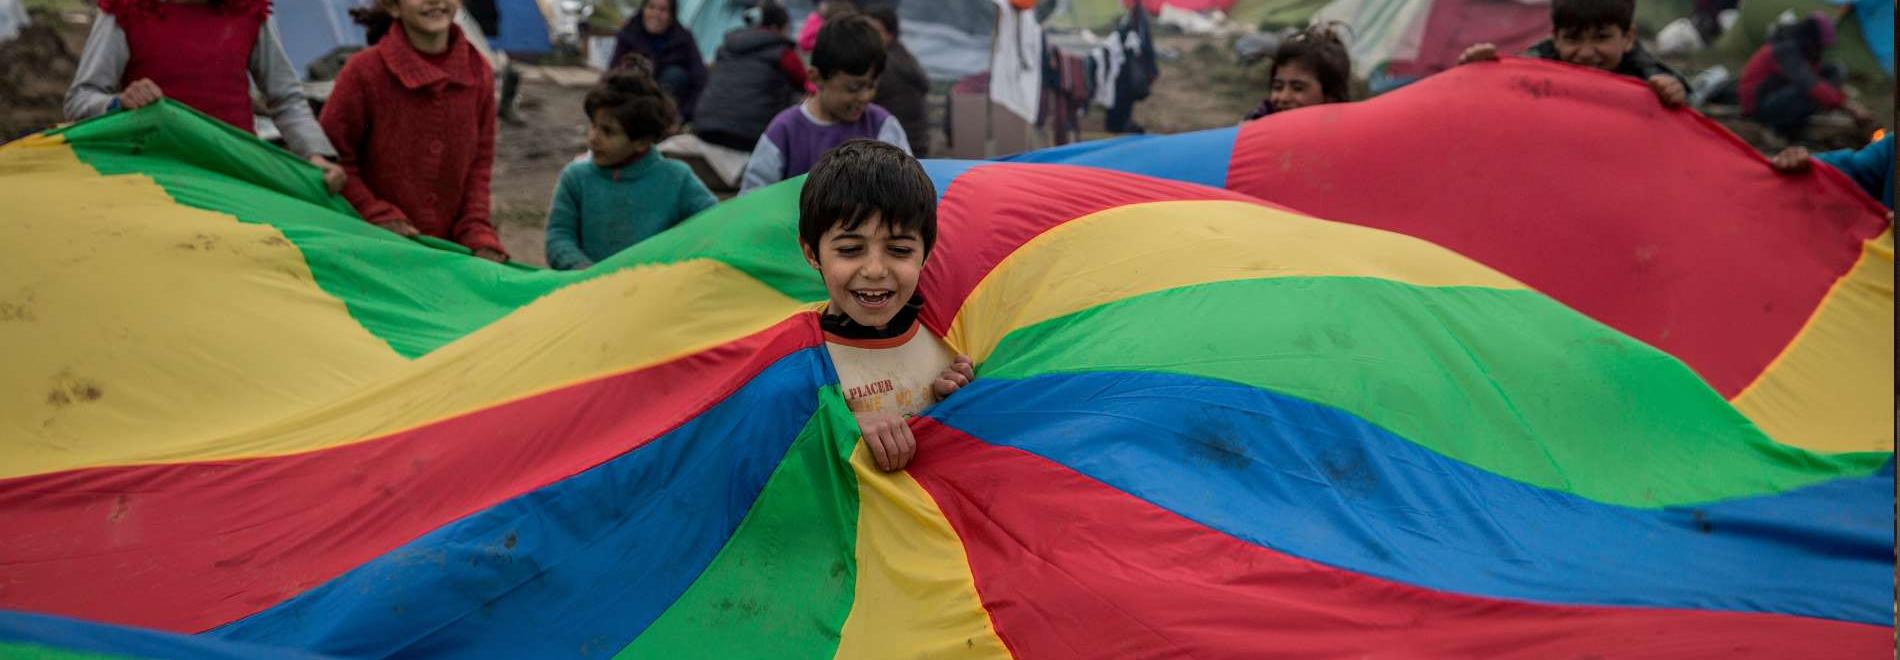 Kinder spielen in Flüchtlingscamp